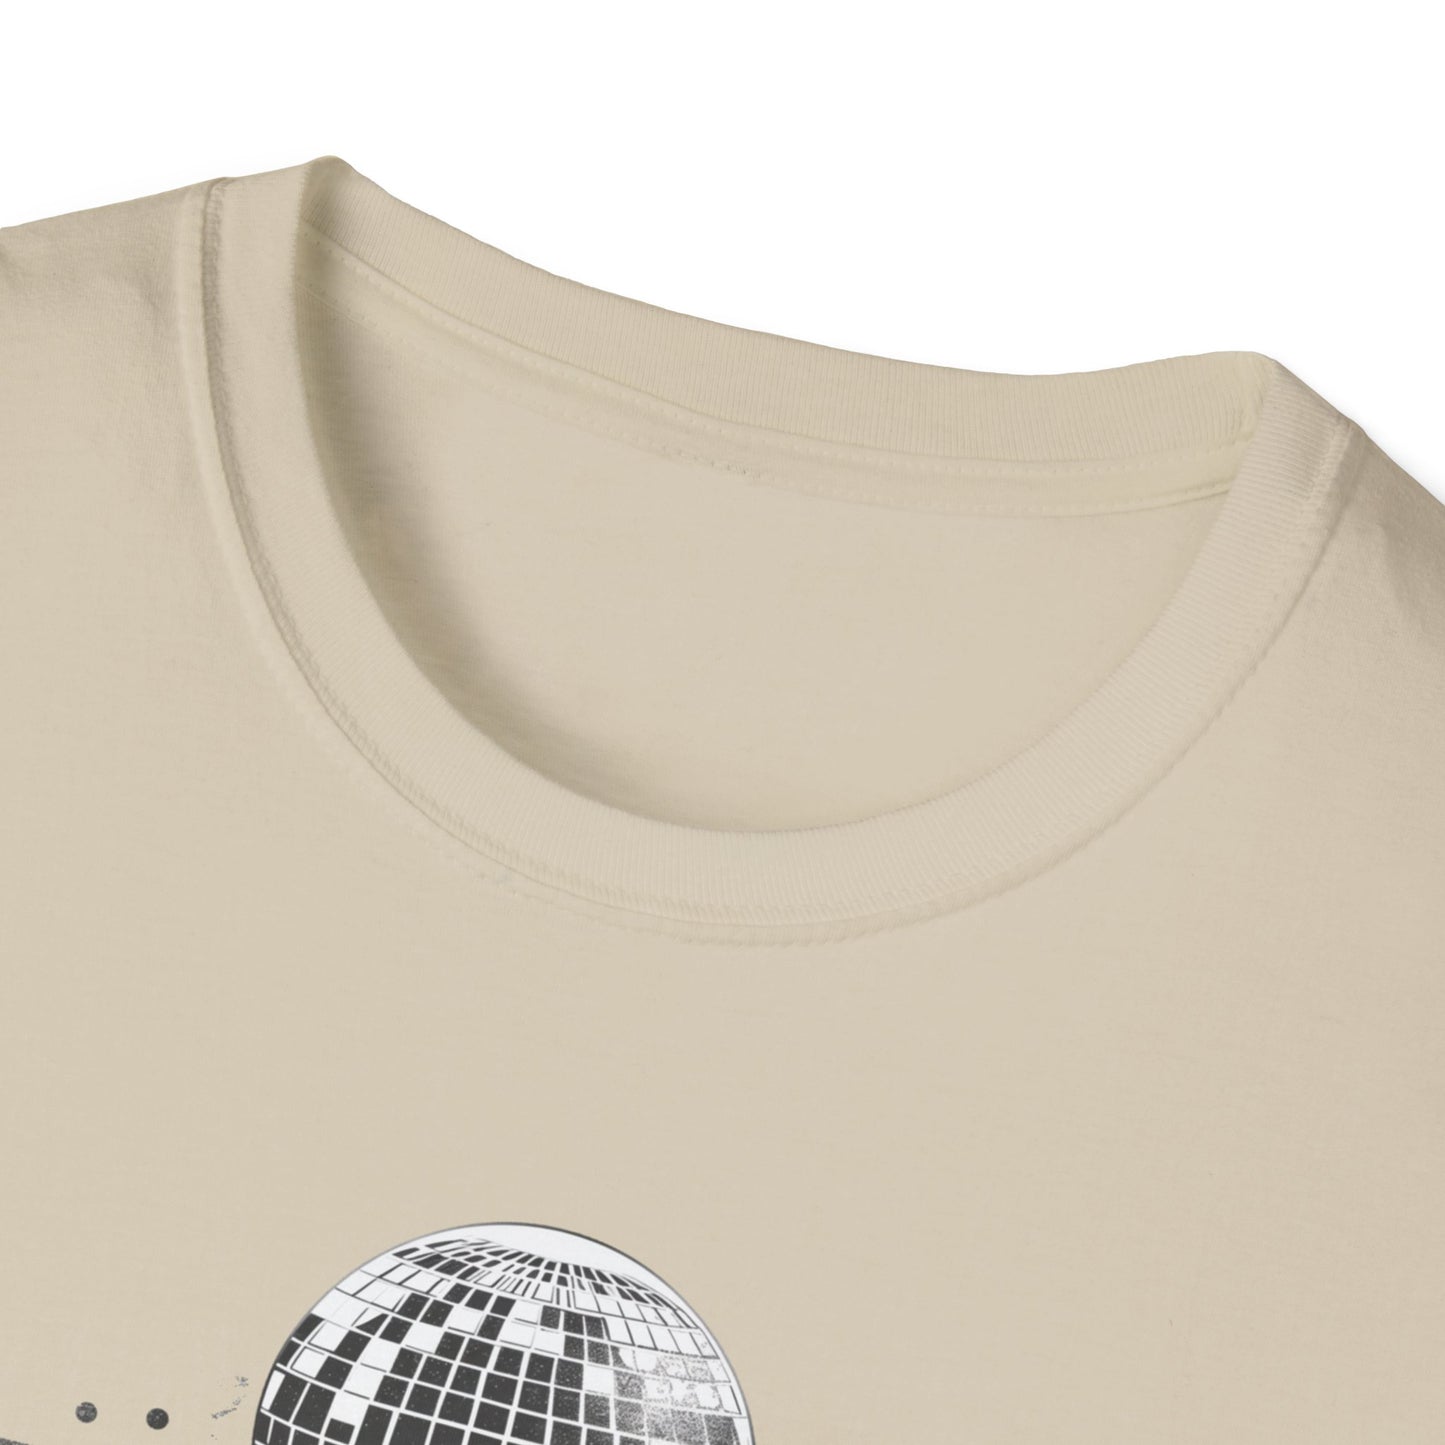 Make It Magical: "Disco Yeti" Unisex Retro T-Shirt